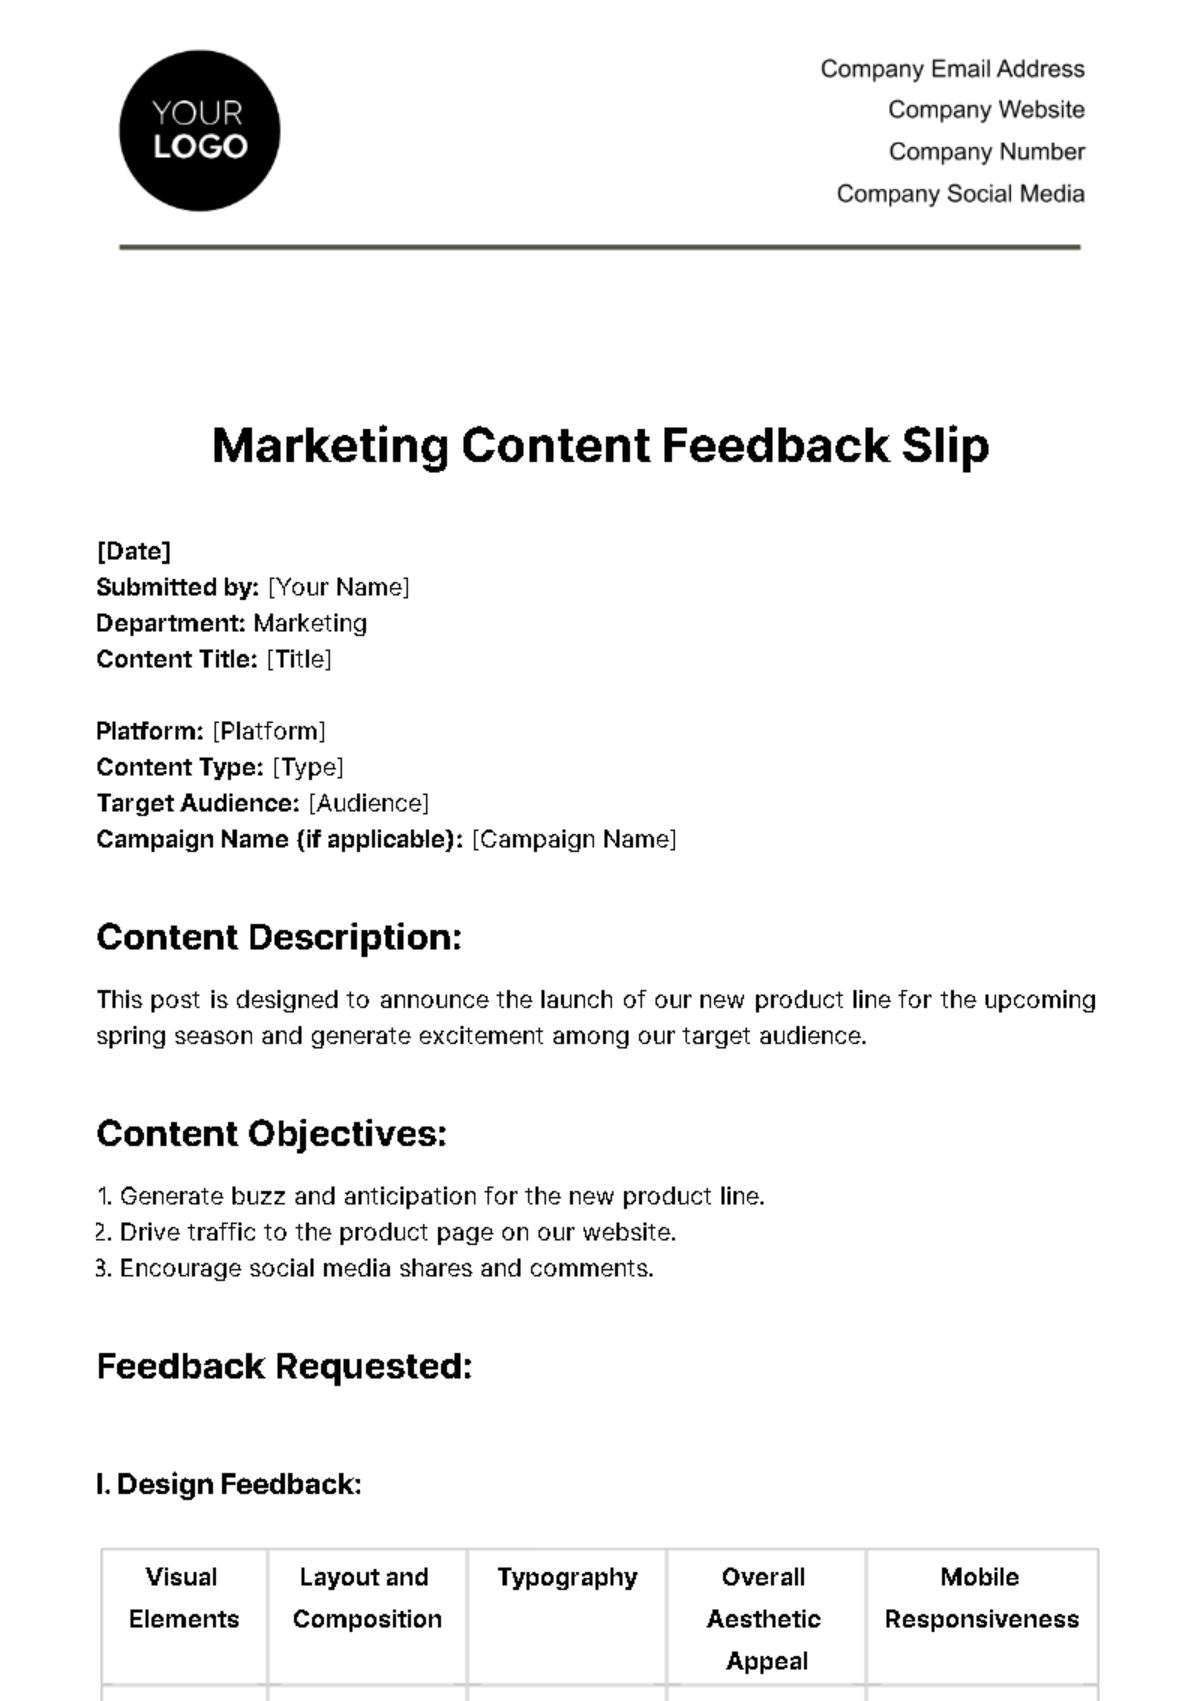 Marketing Content Feedback Slip Template